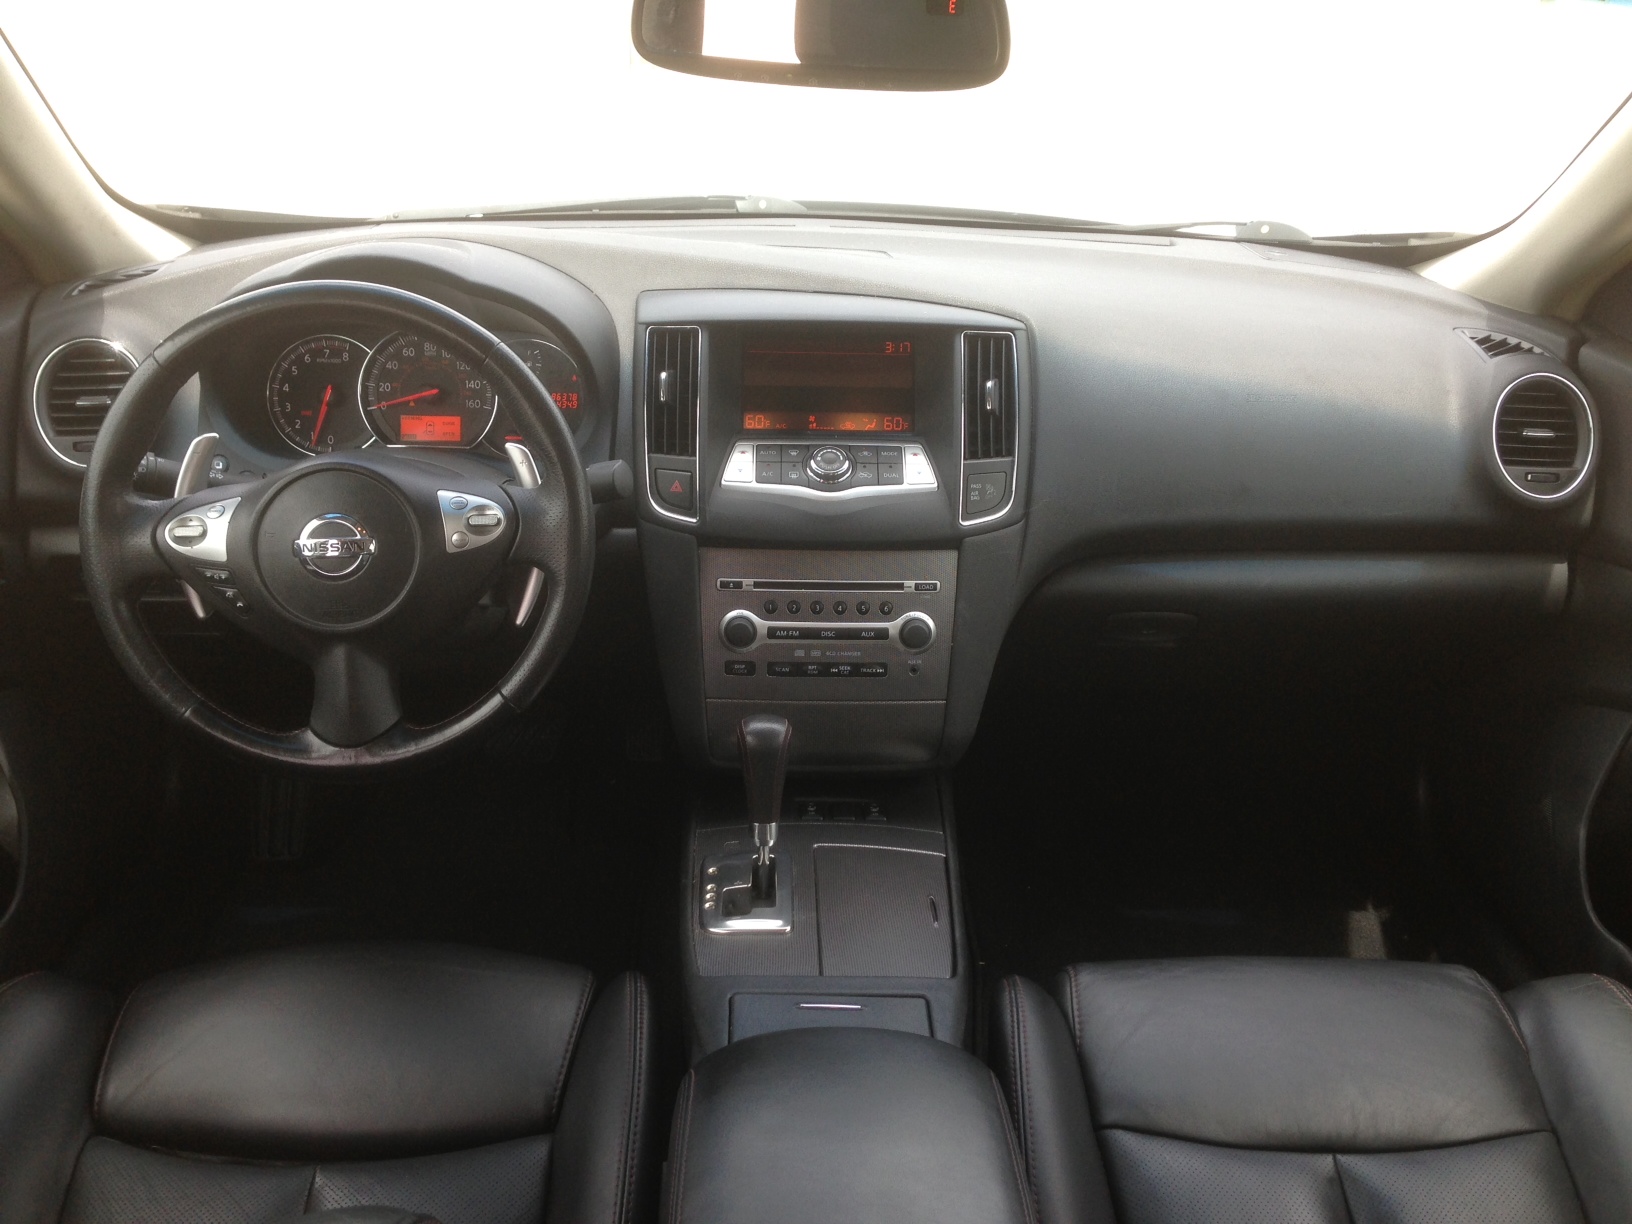 2009 Nissan Maxima Sv Sport Front Interior